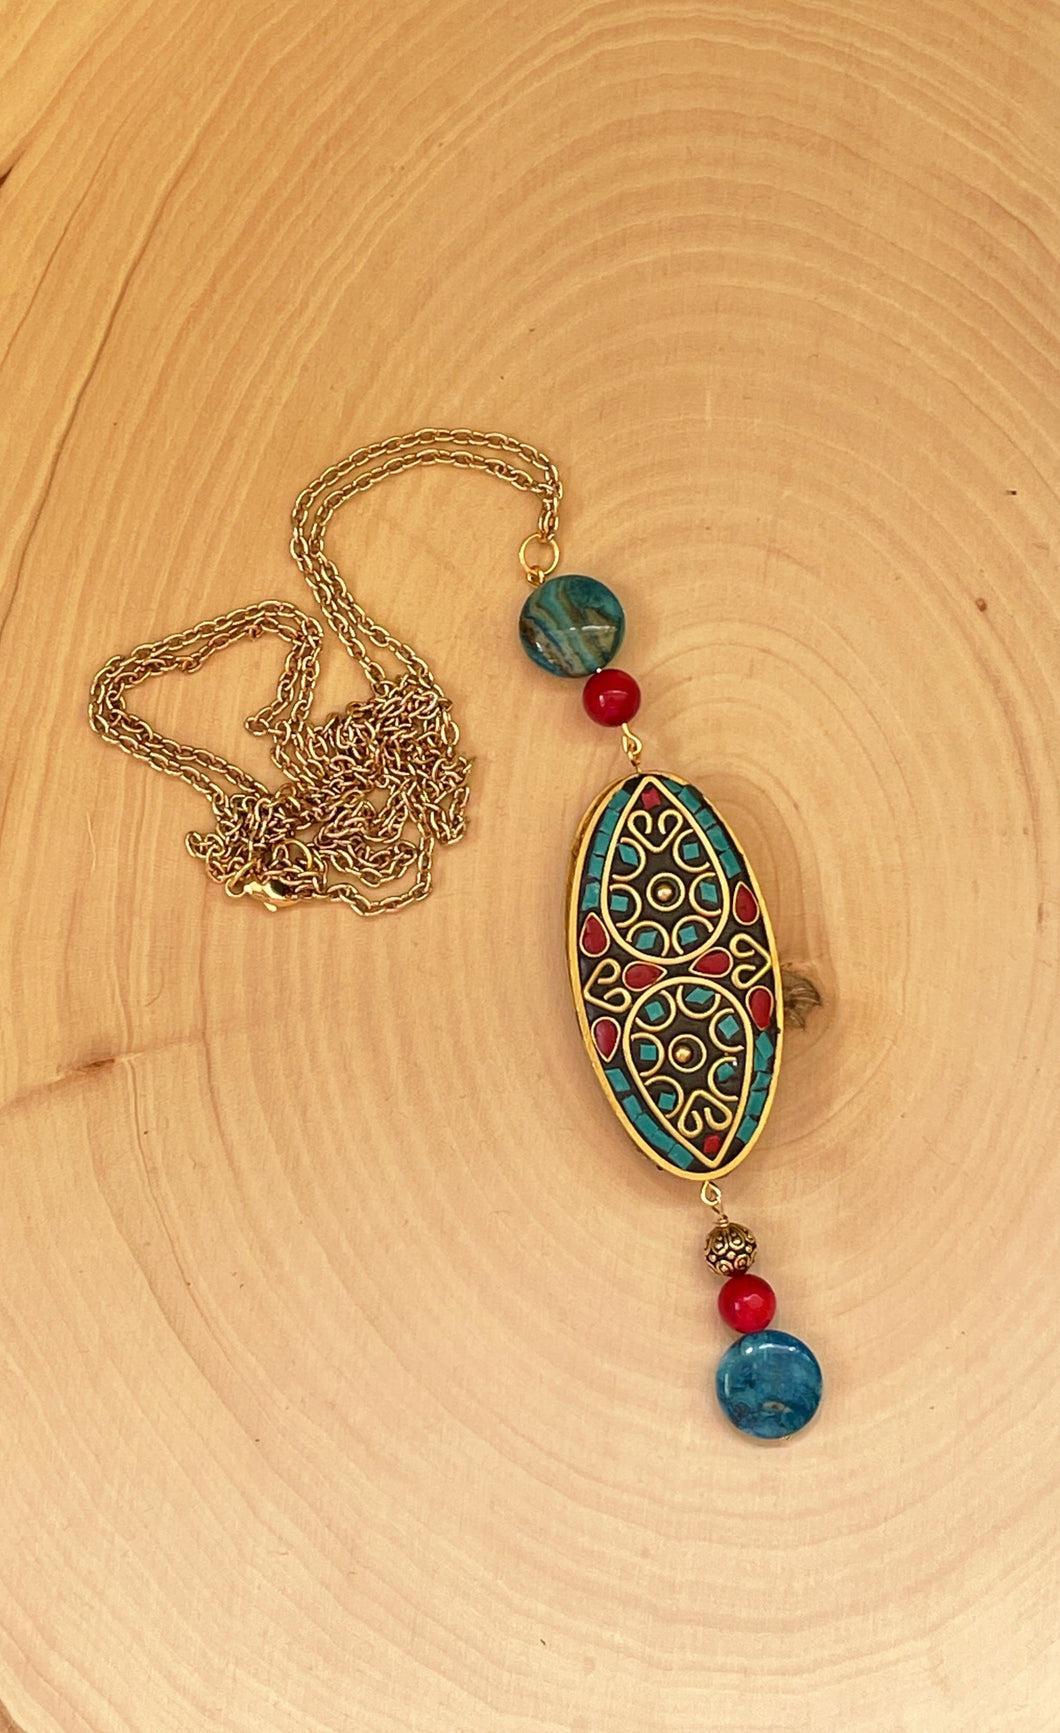 Tibetan Style Inlaid Bead and Jasper Pendant Necklace